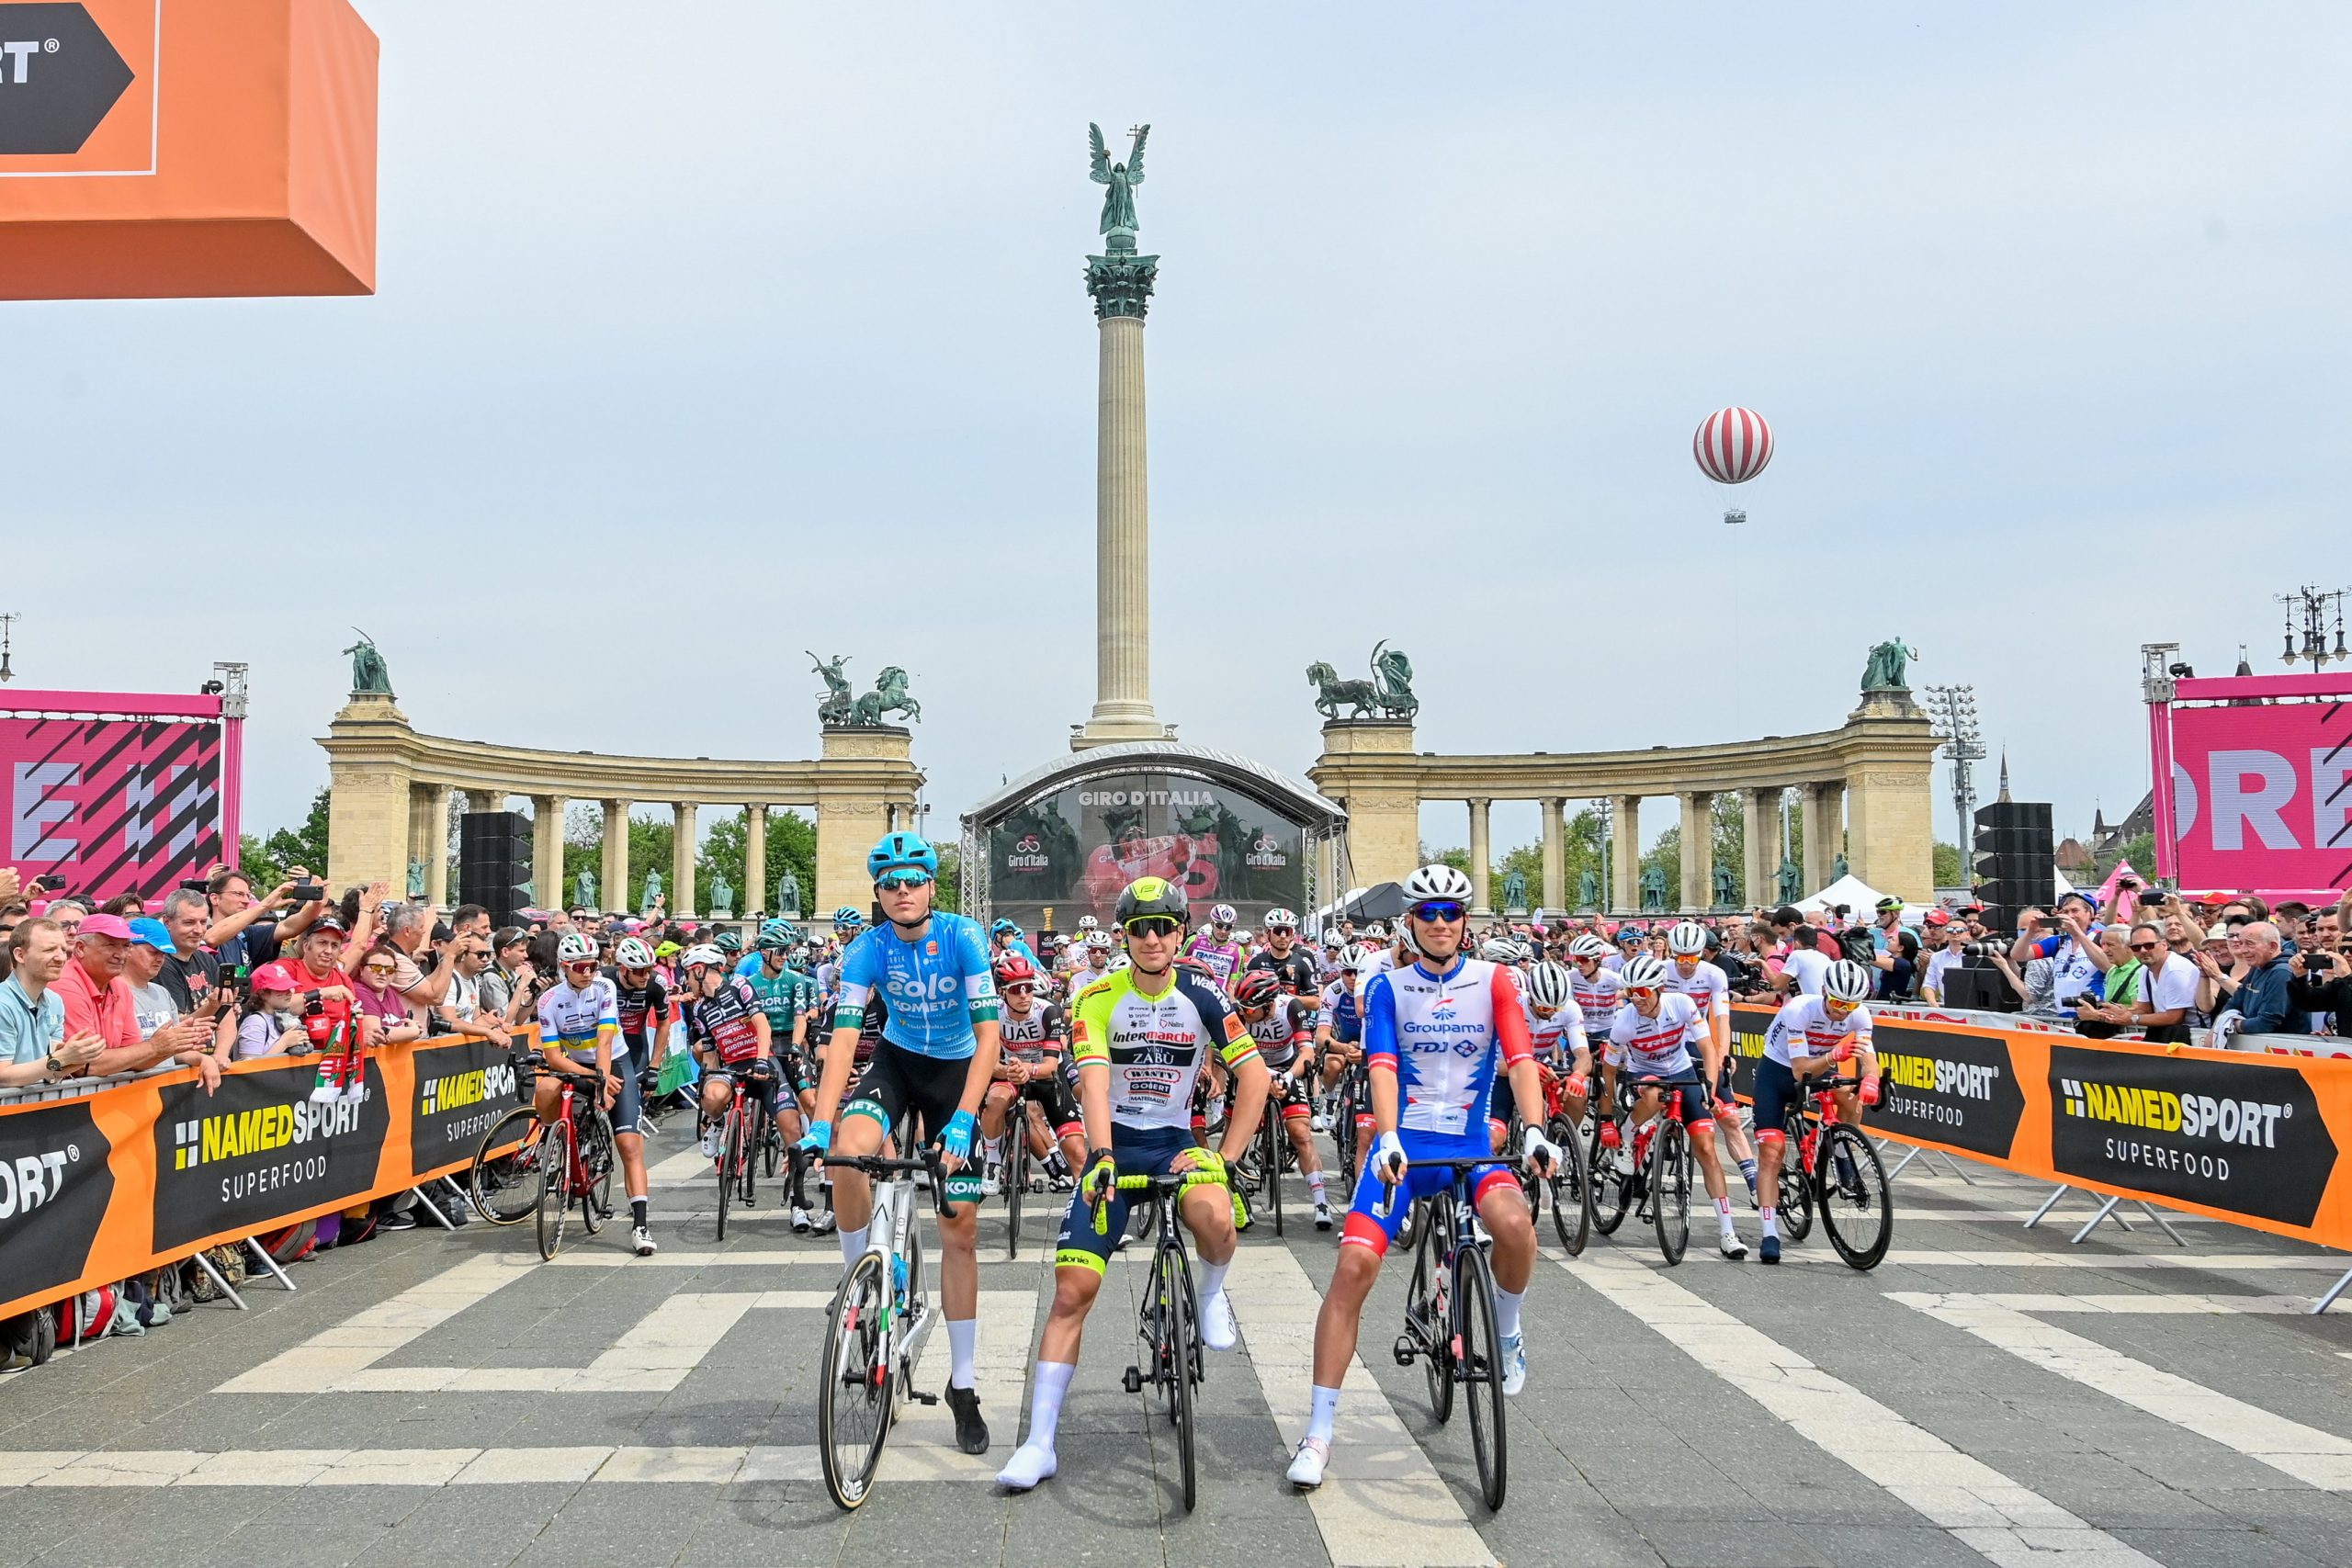 Giro d'Italia Gets Under Way in Budapest - PHOTOS!